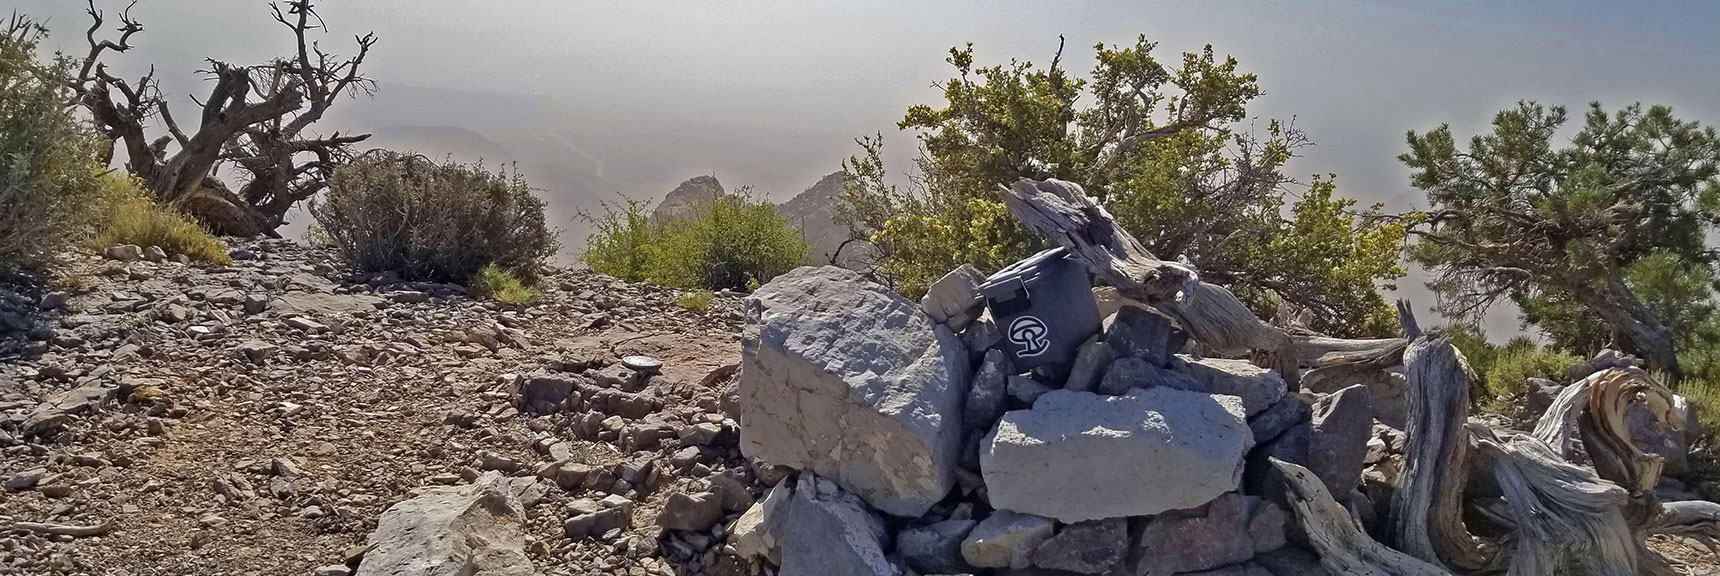 Summit Box on Mountain Springs Peak. Spectacular 360 Degree View Blocked by Haze | Rainbow Mountains Upper Crest Ridge, Nevada